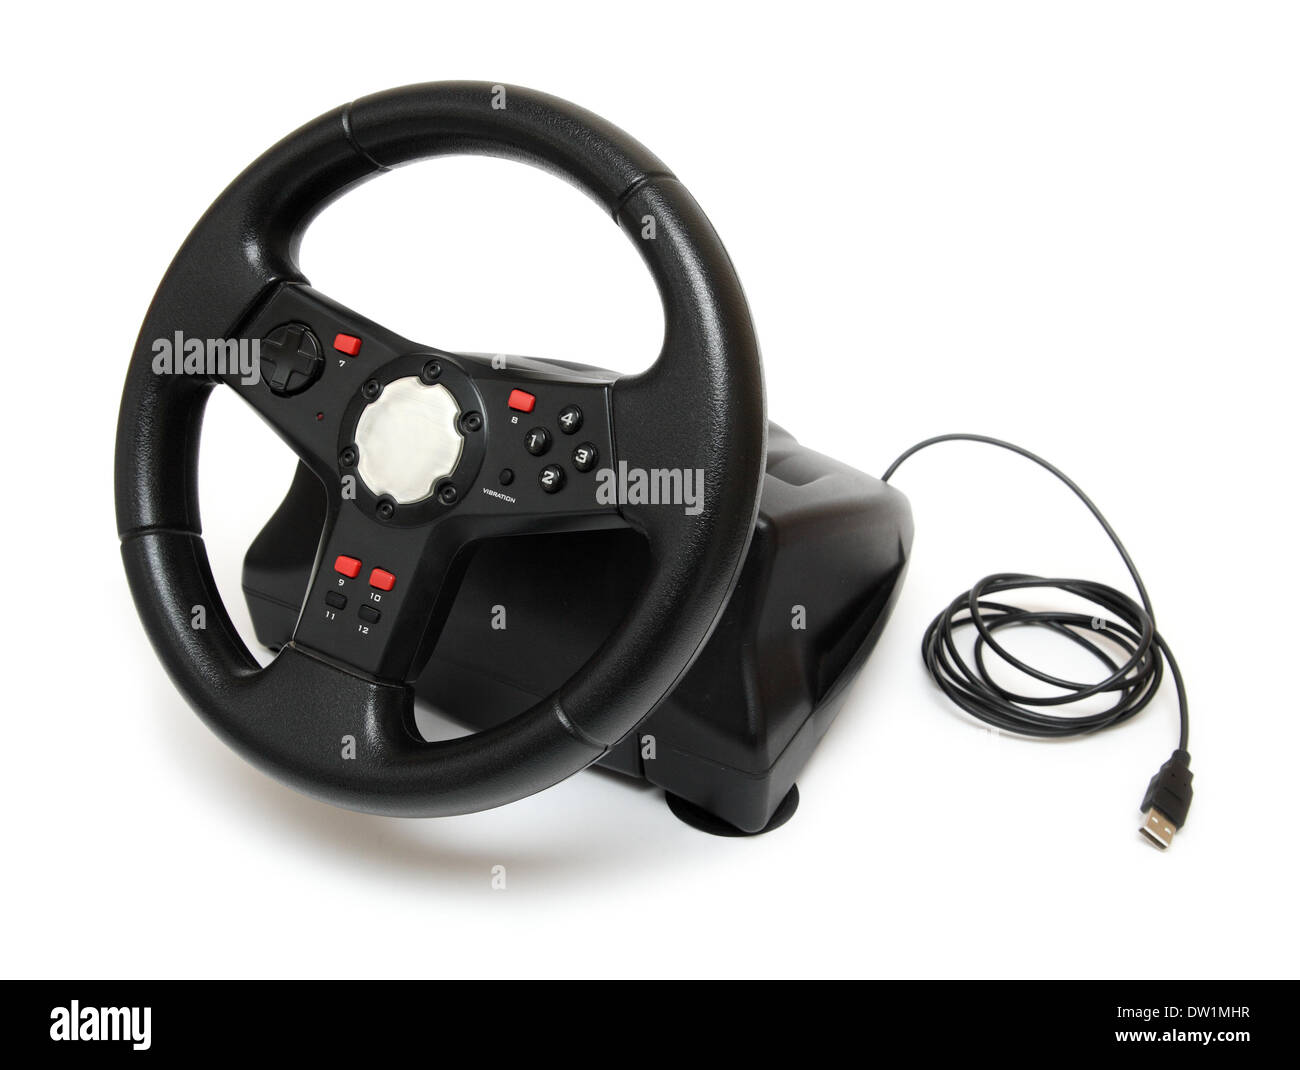 steering wheel simulator for pc games Stock Photo